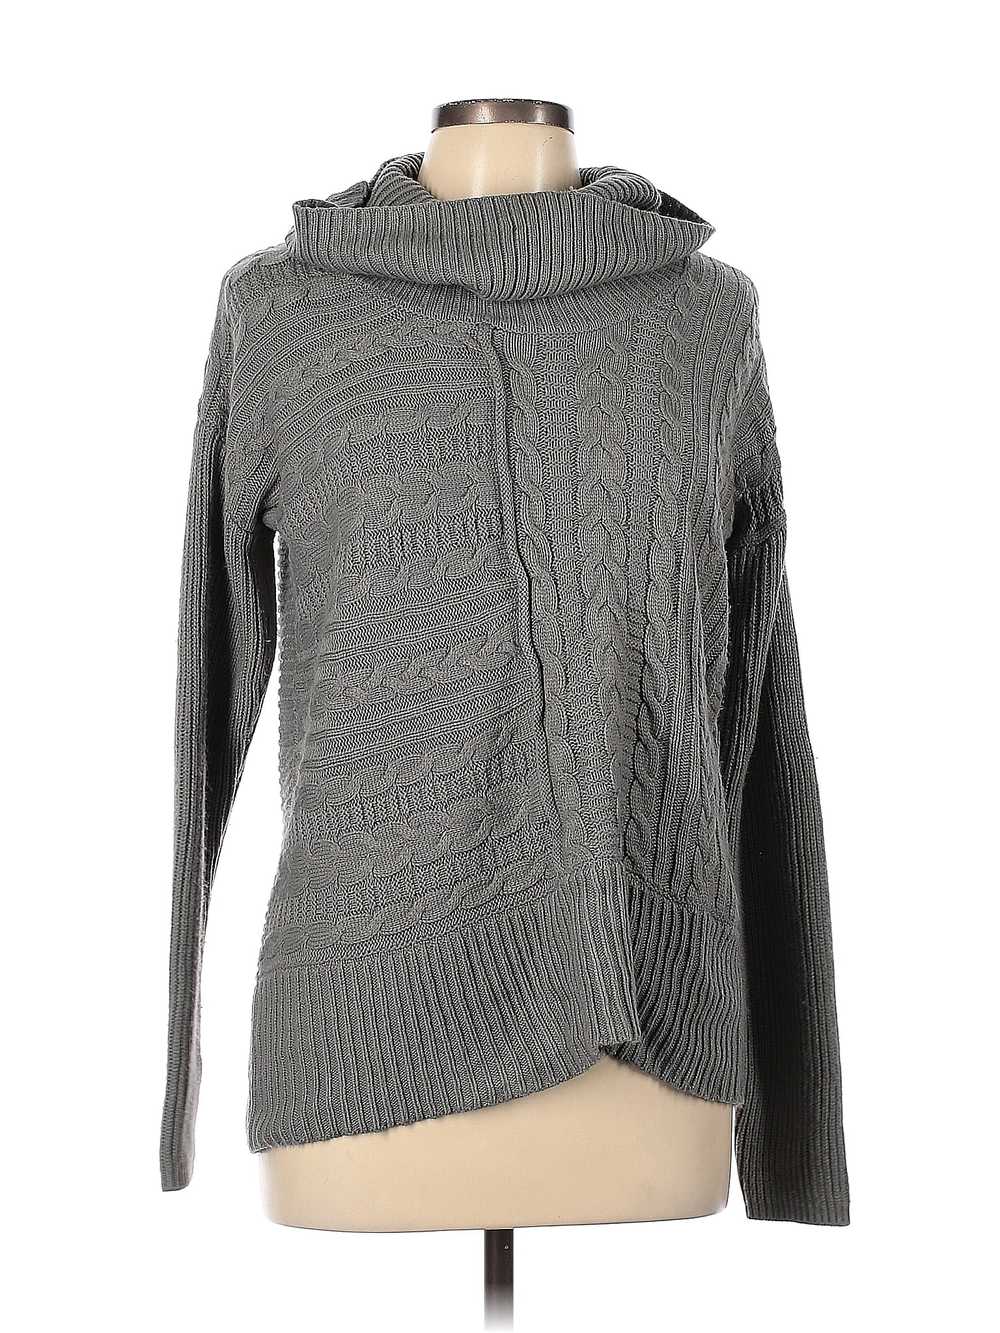 DressBarn Women Gray Pullover Sweater L - image 1